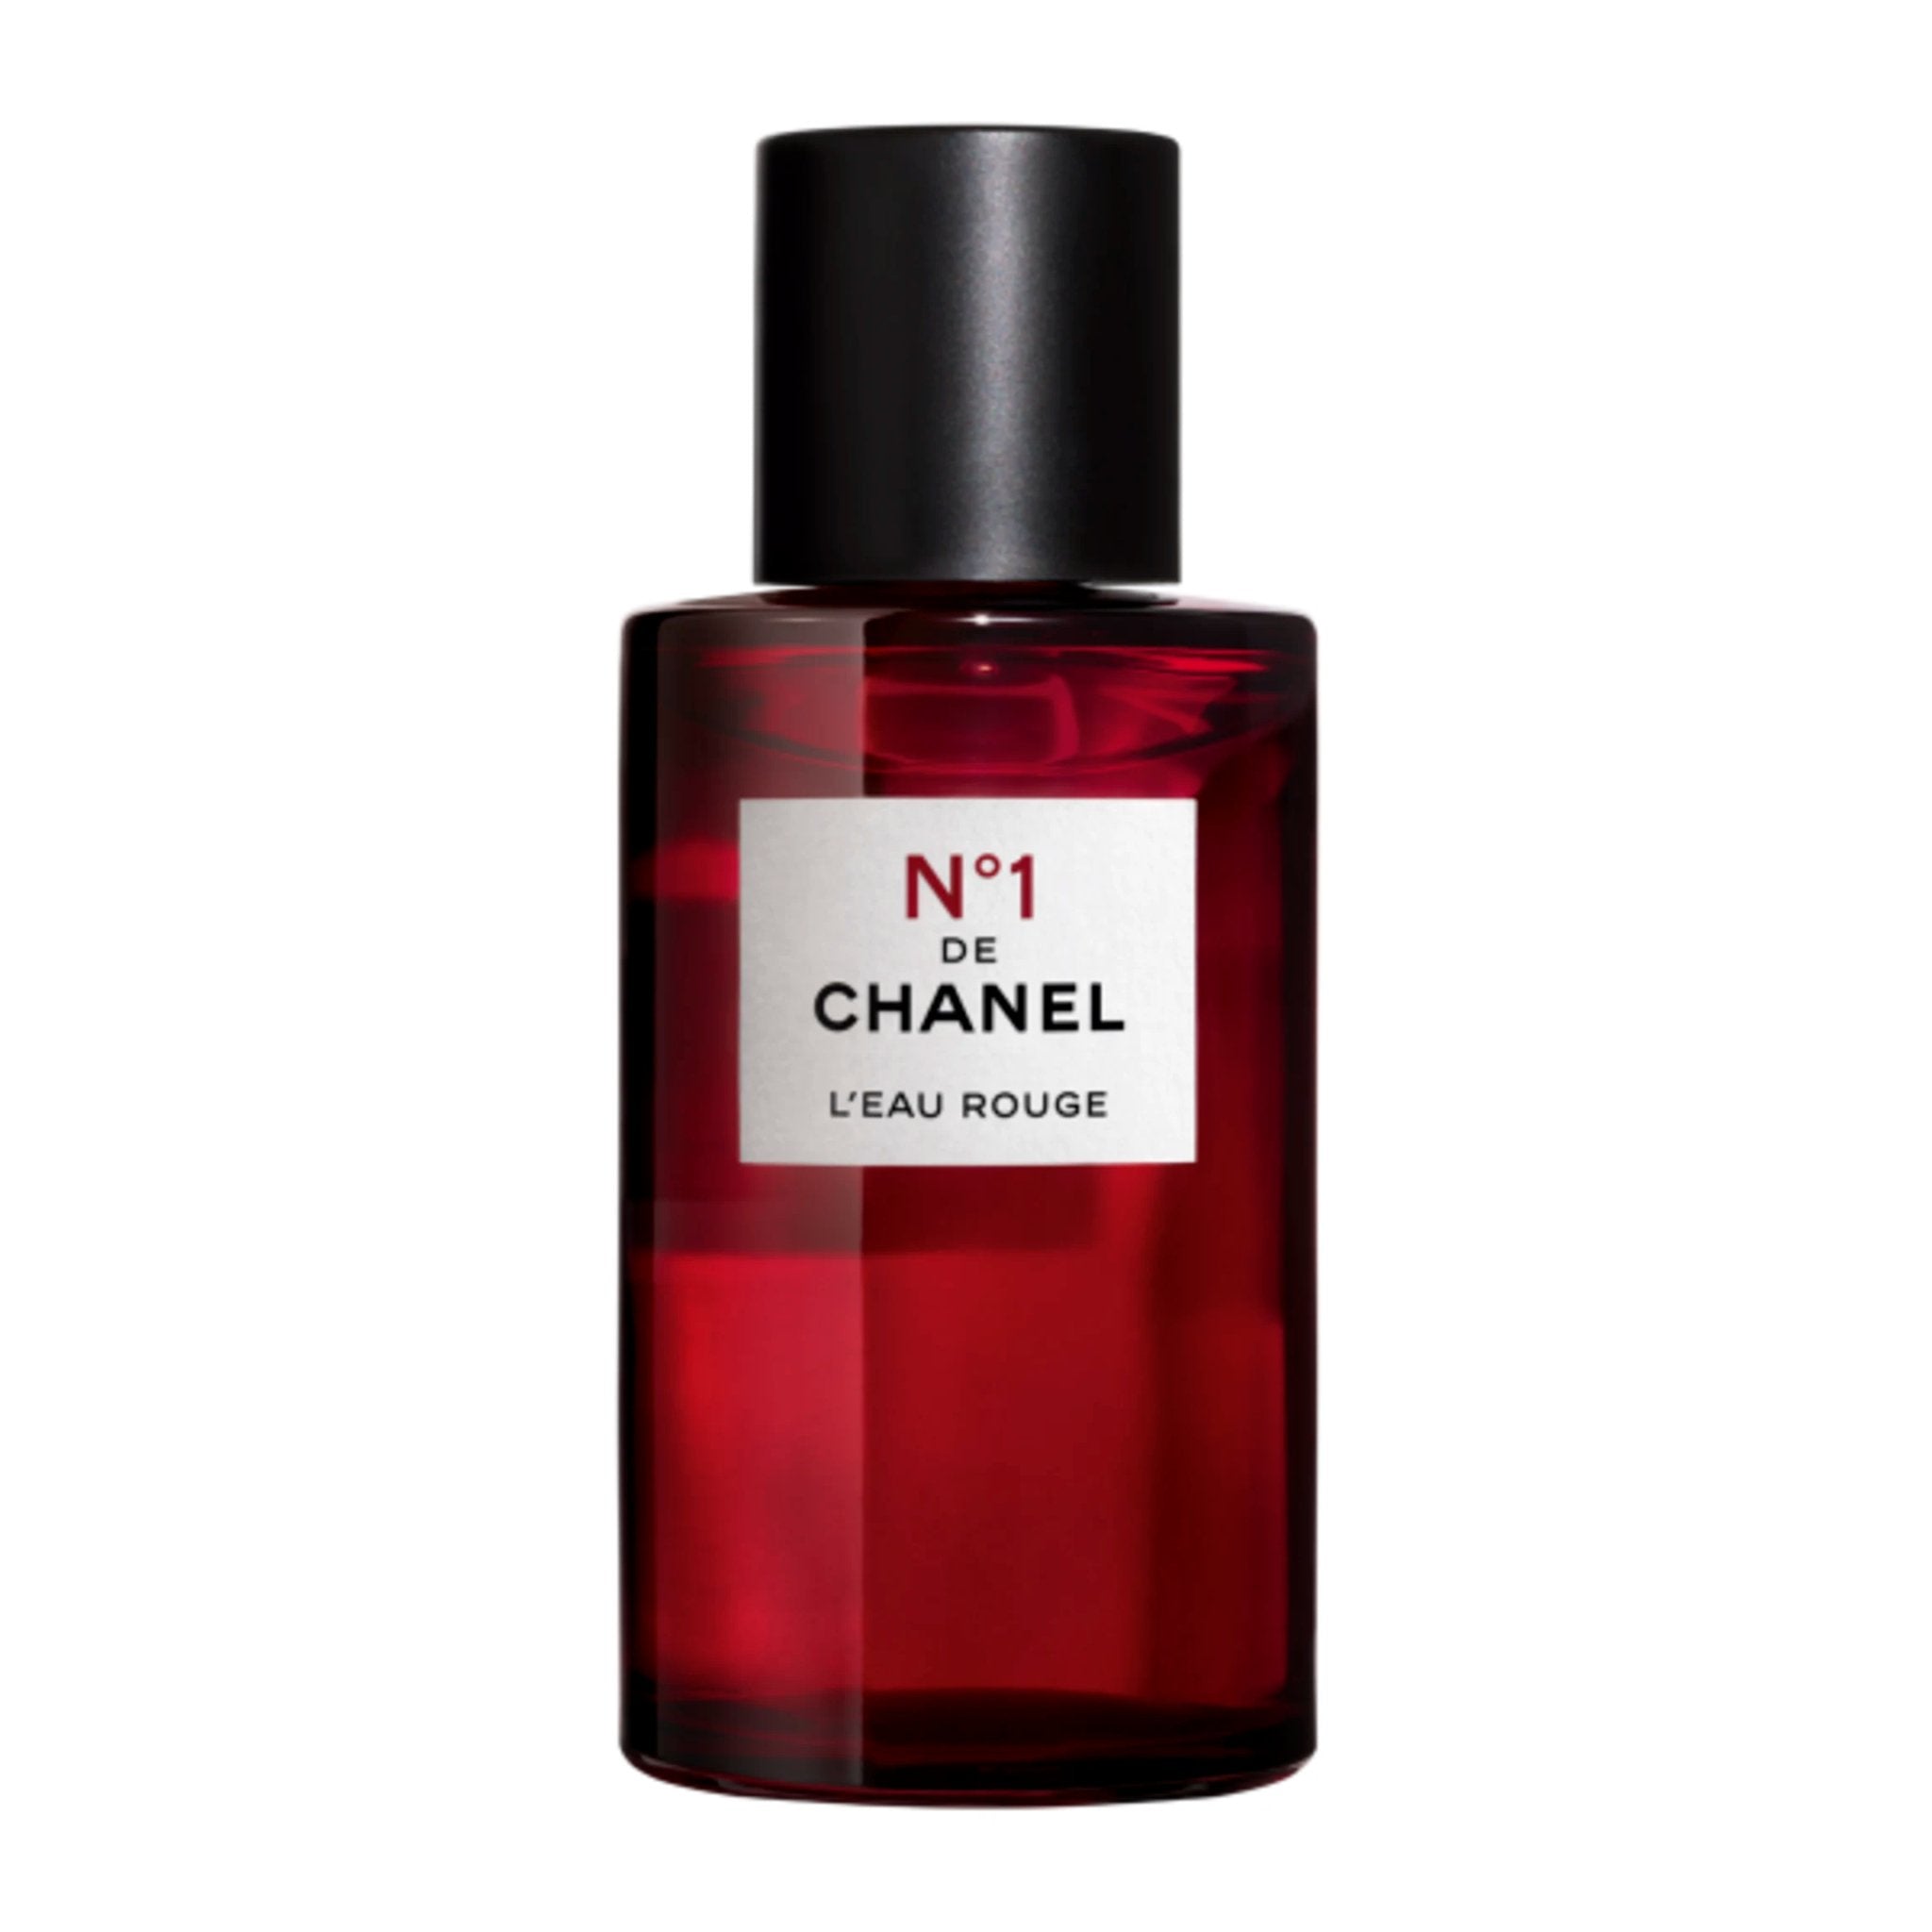 Chanel No1 de Chanel - MAKEUP LINE, News